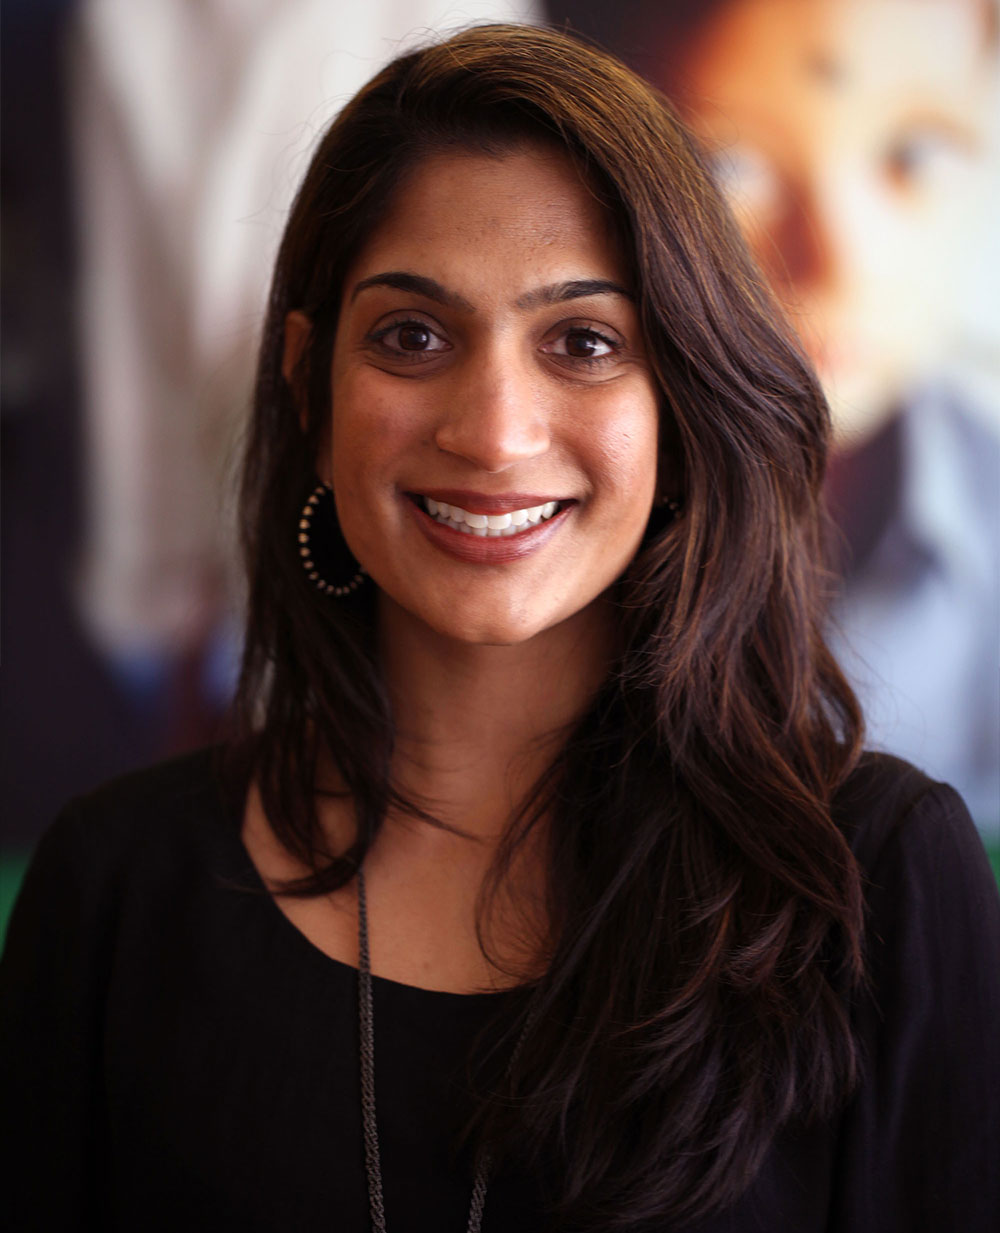 Professional headshot of Priya Desai